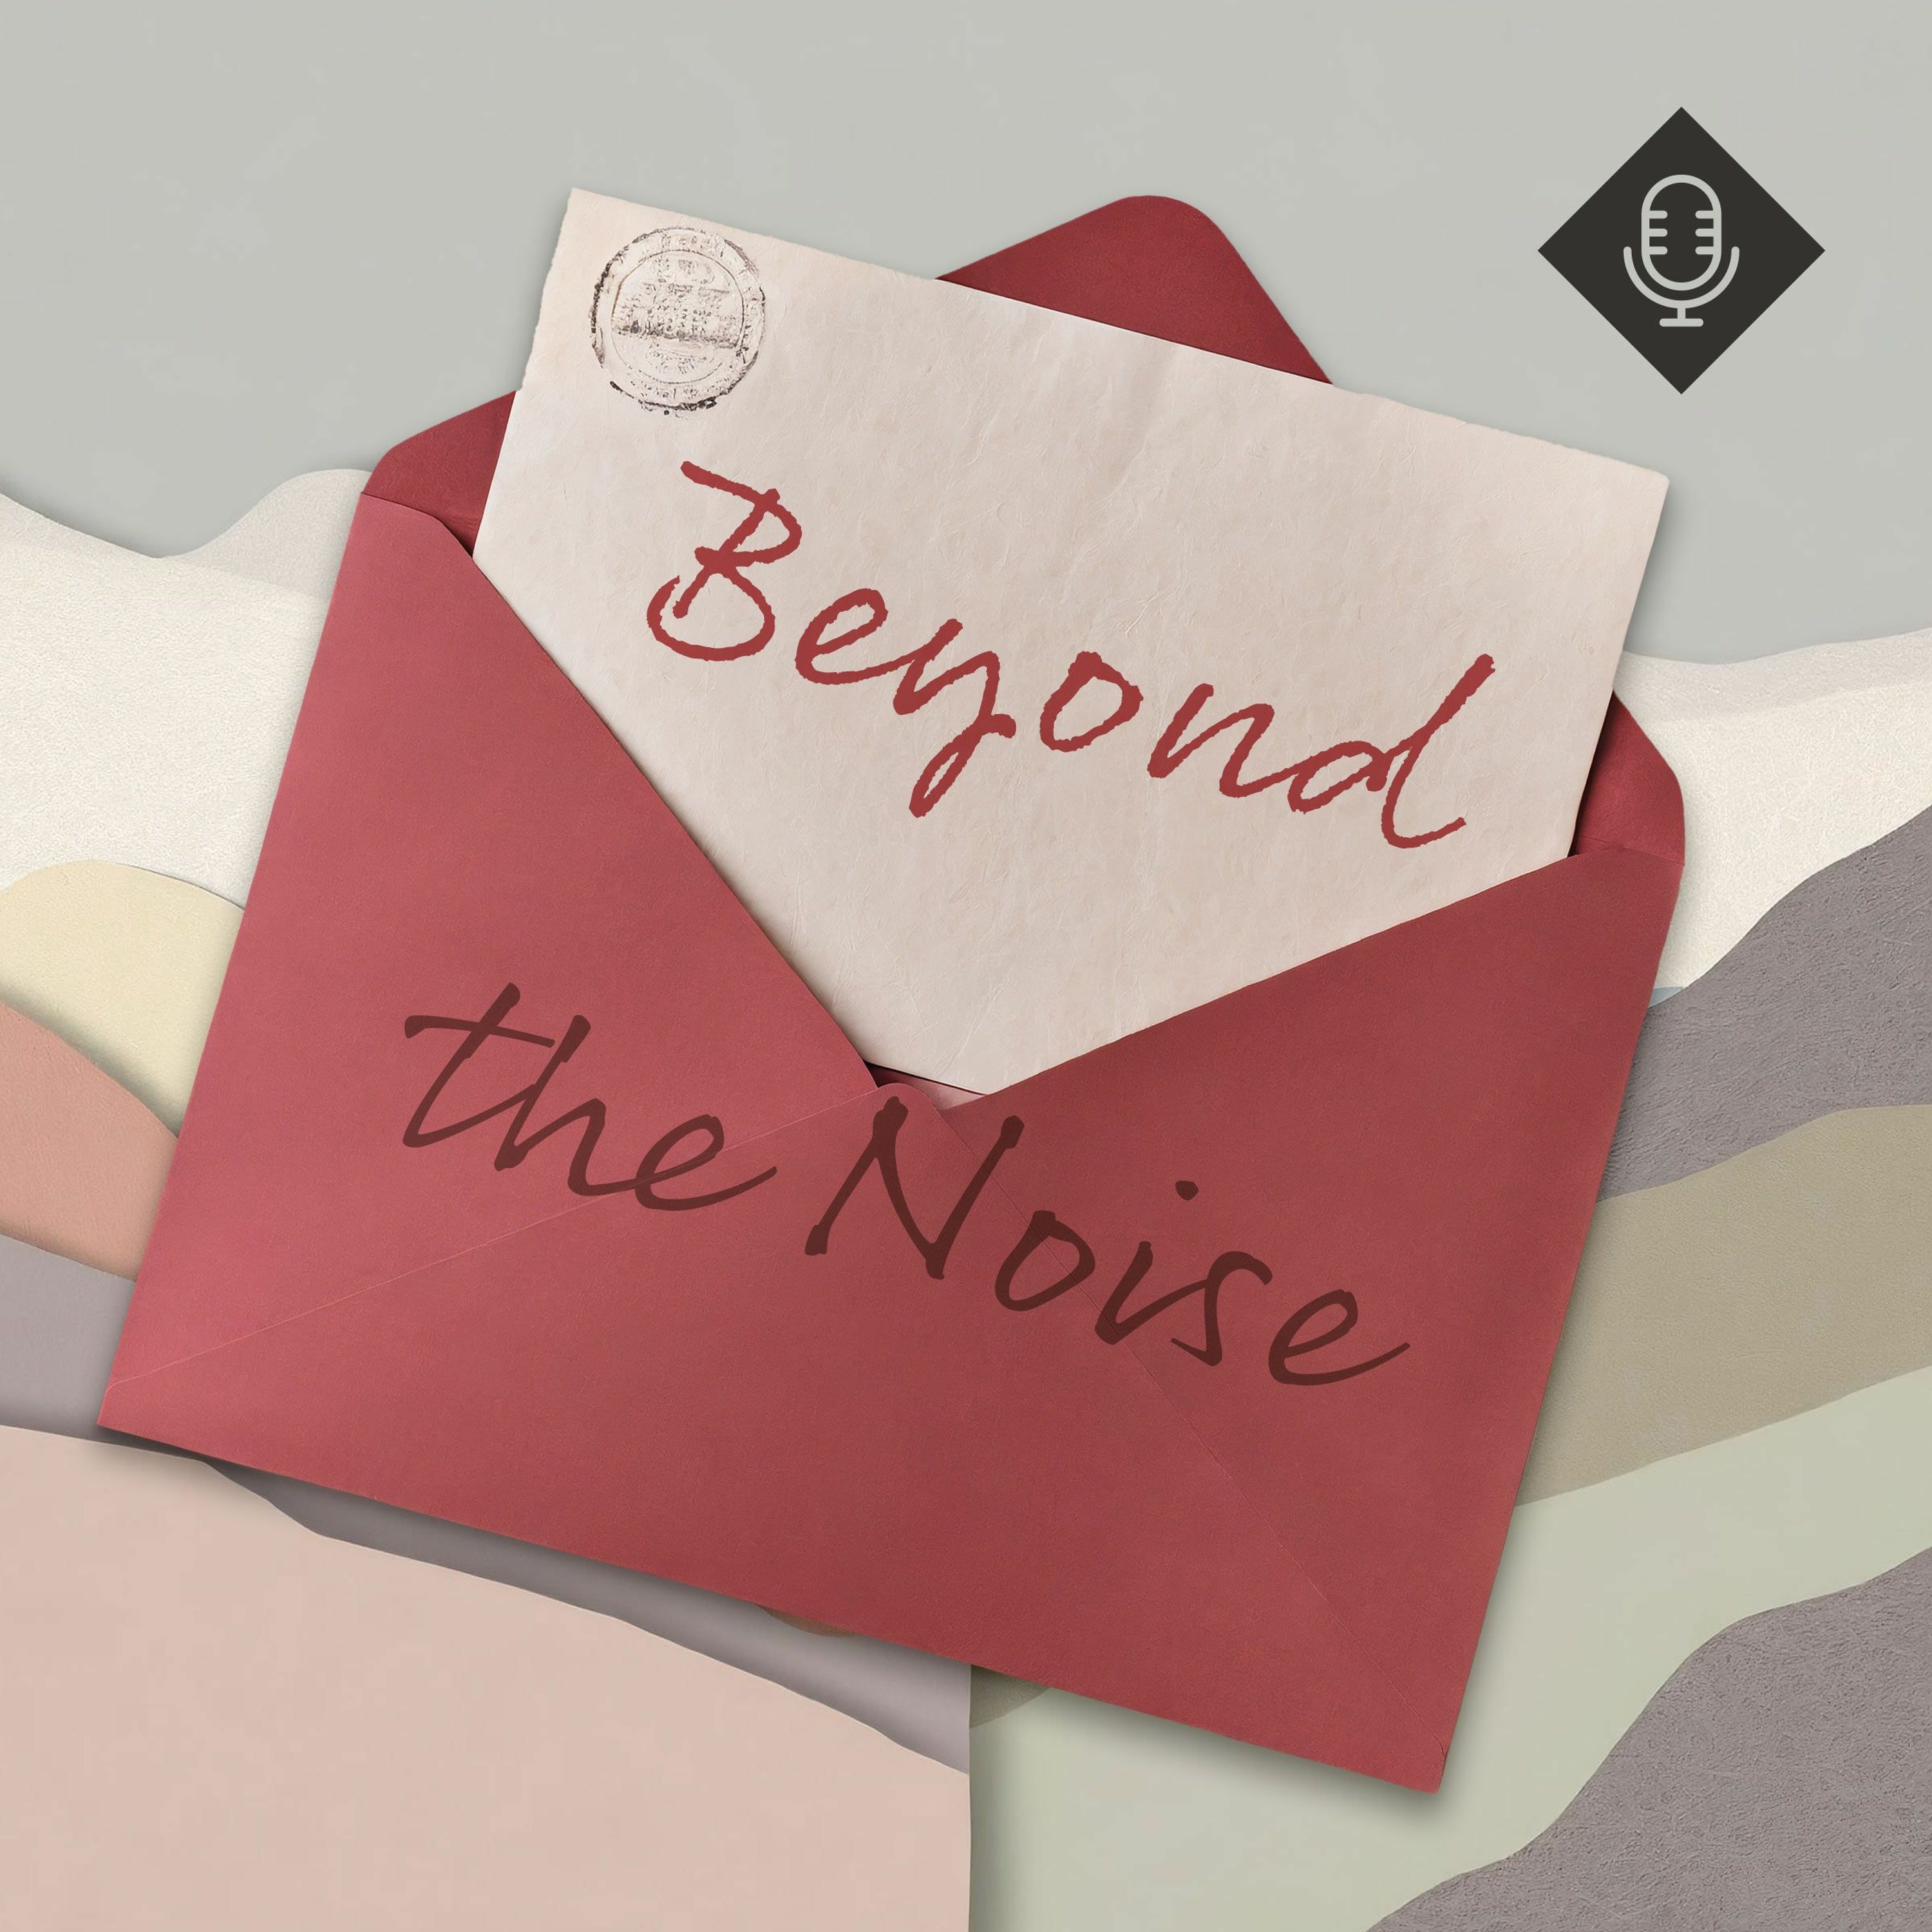 ’Beyond the Noise’ / Neil Dawson